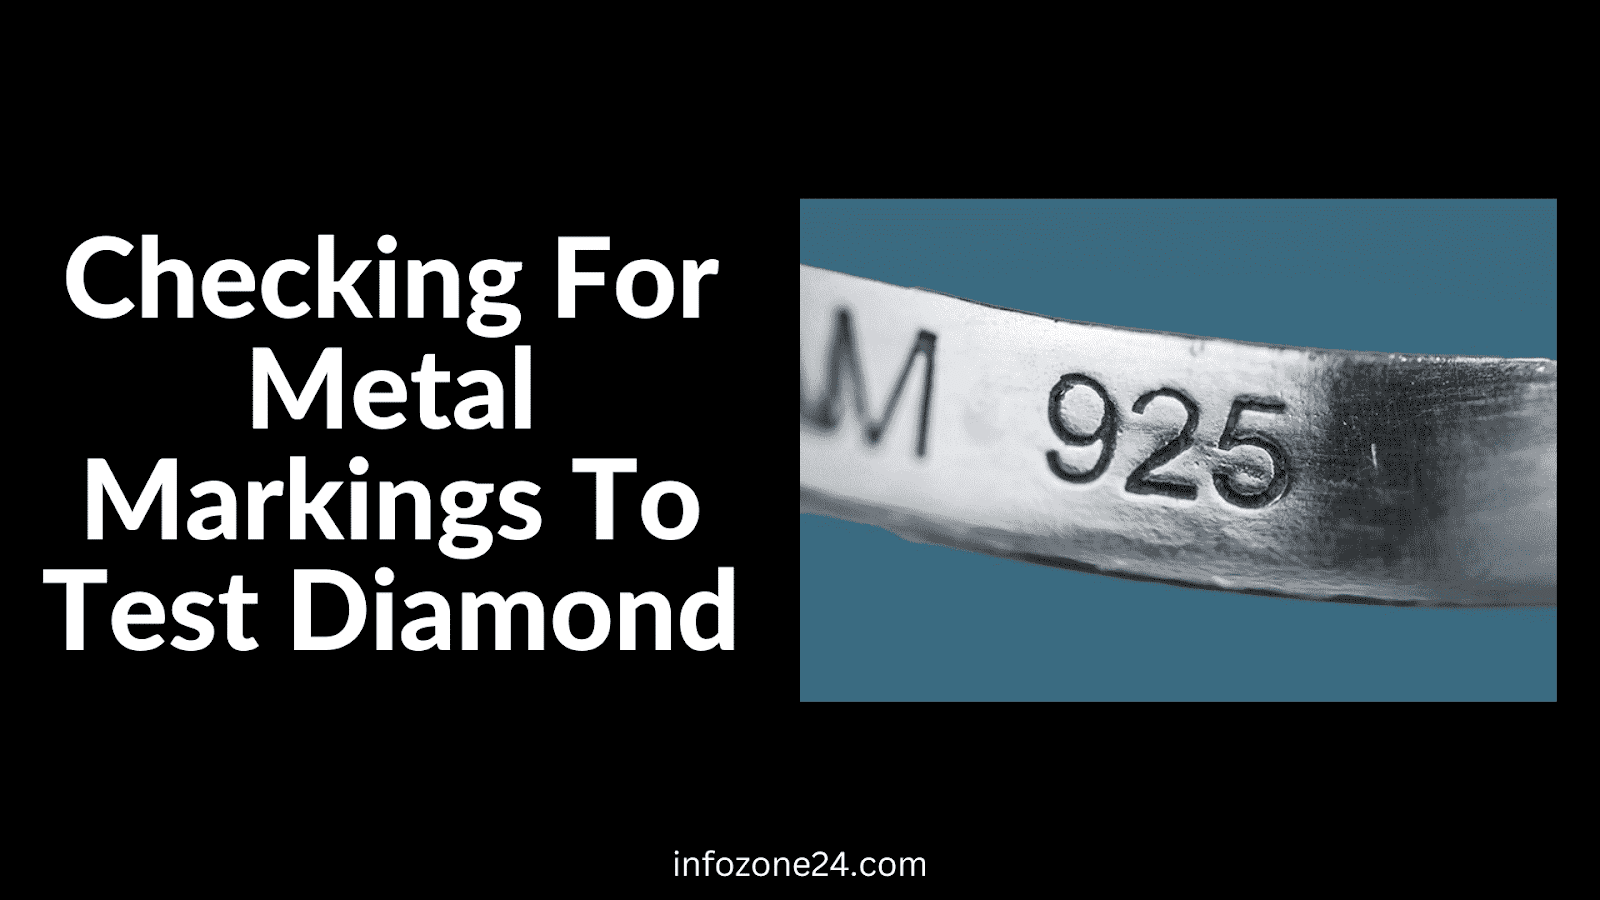 Check For Metal Markings To Test Diamond